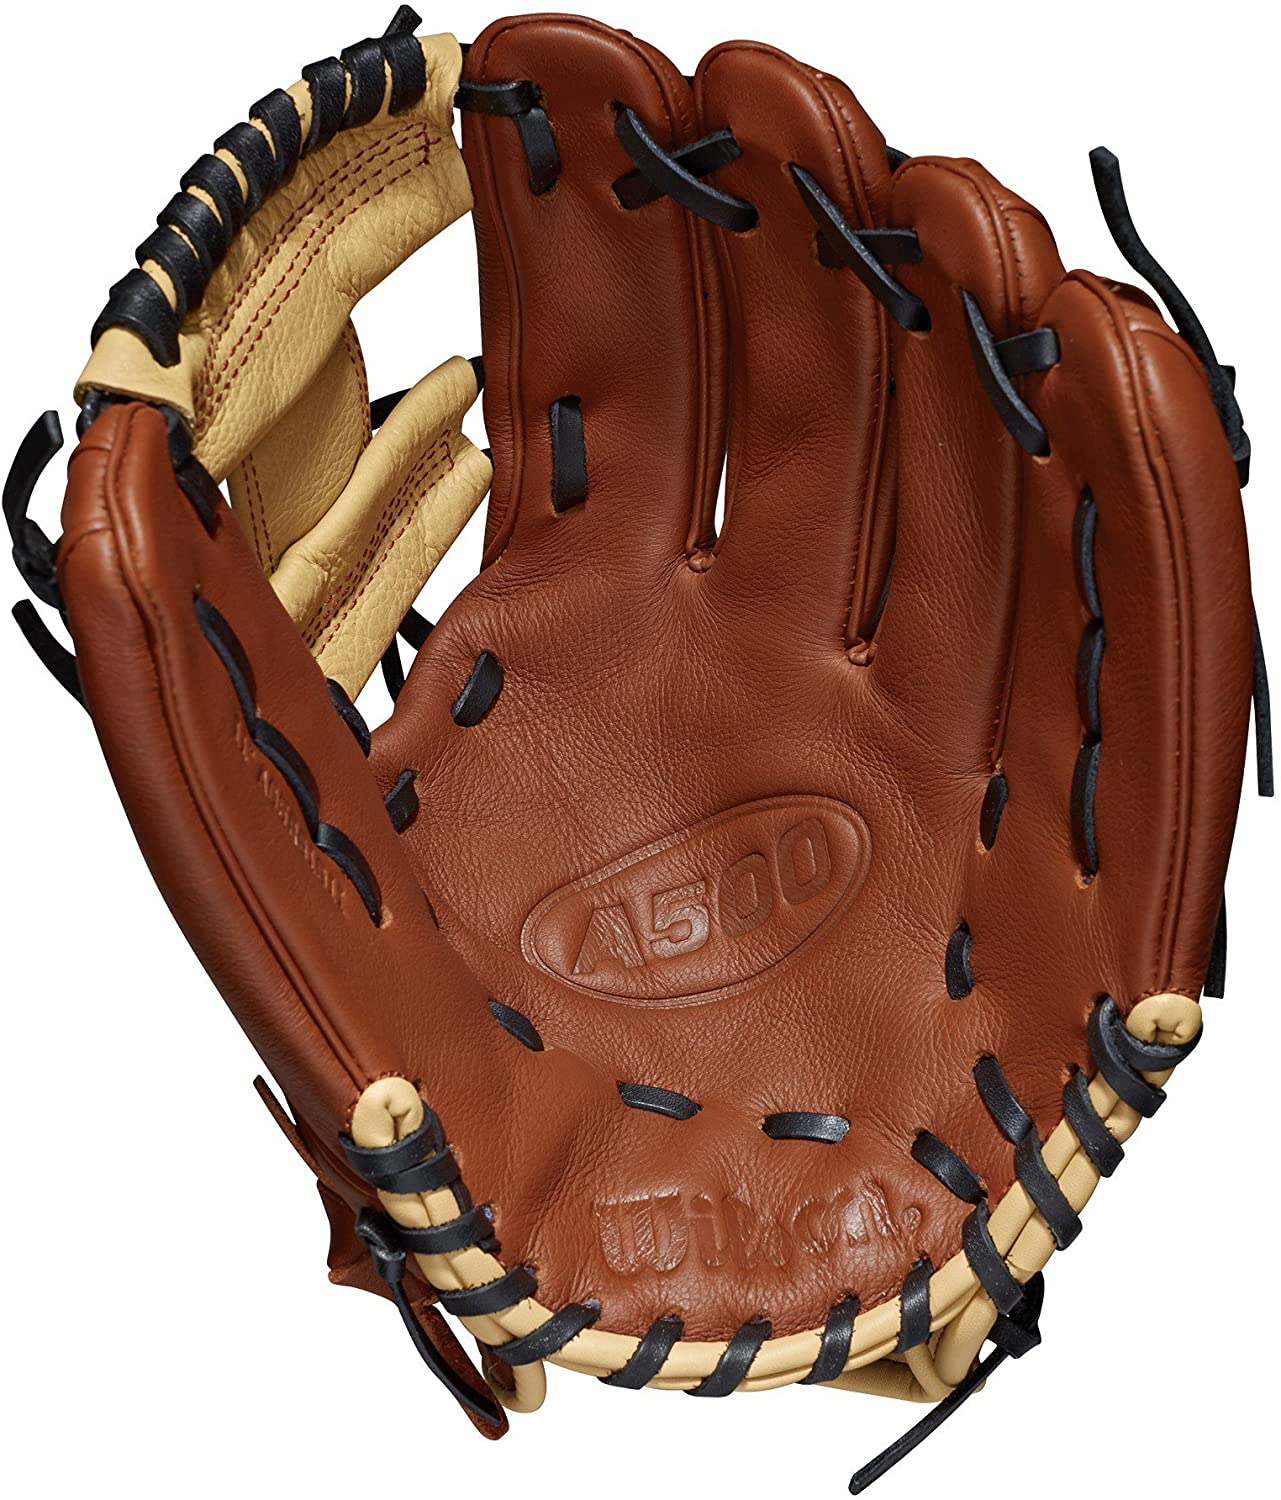 New Wilson A05RB1811 A500 11.5 Robinson Cano Baseball Glove Black